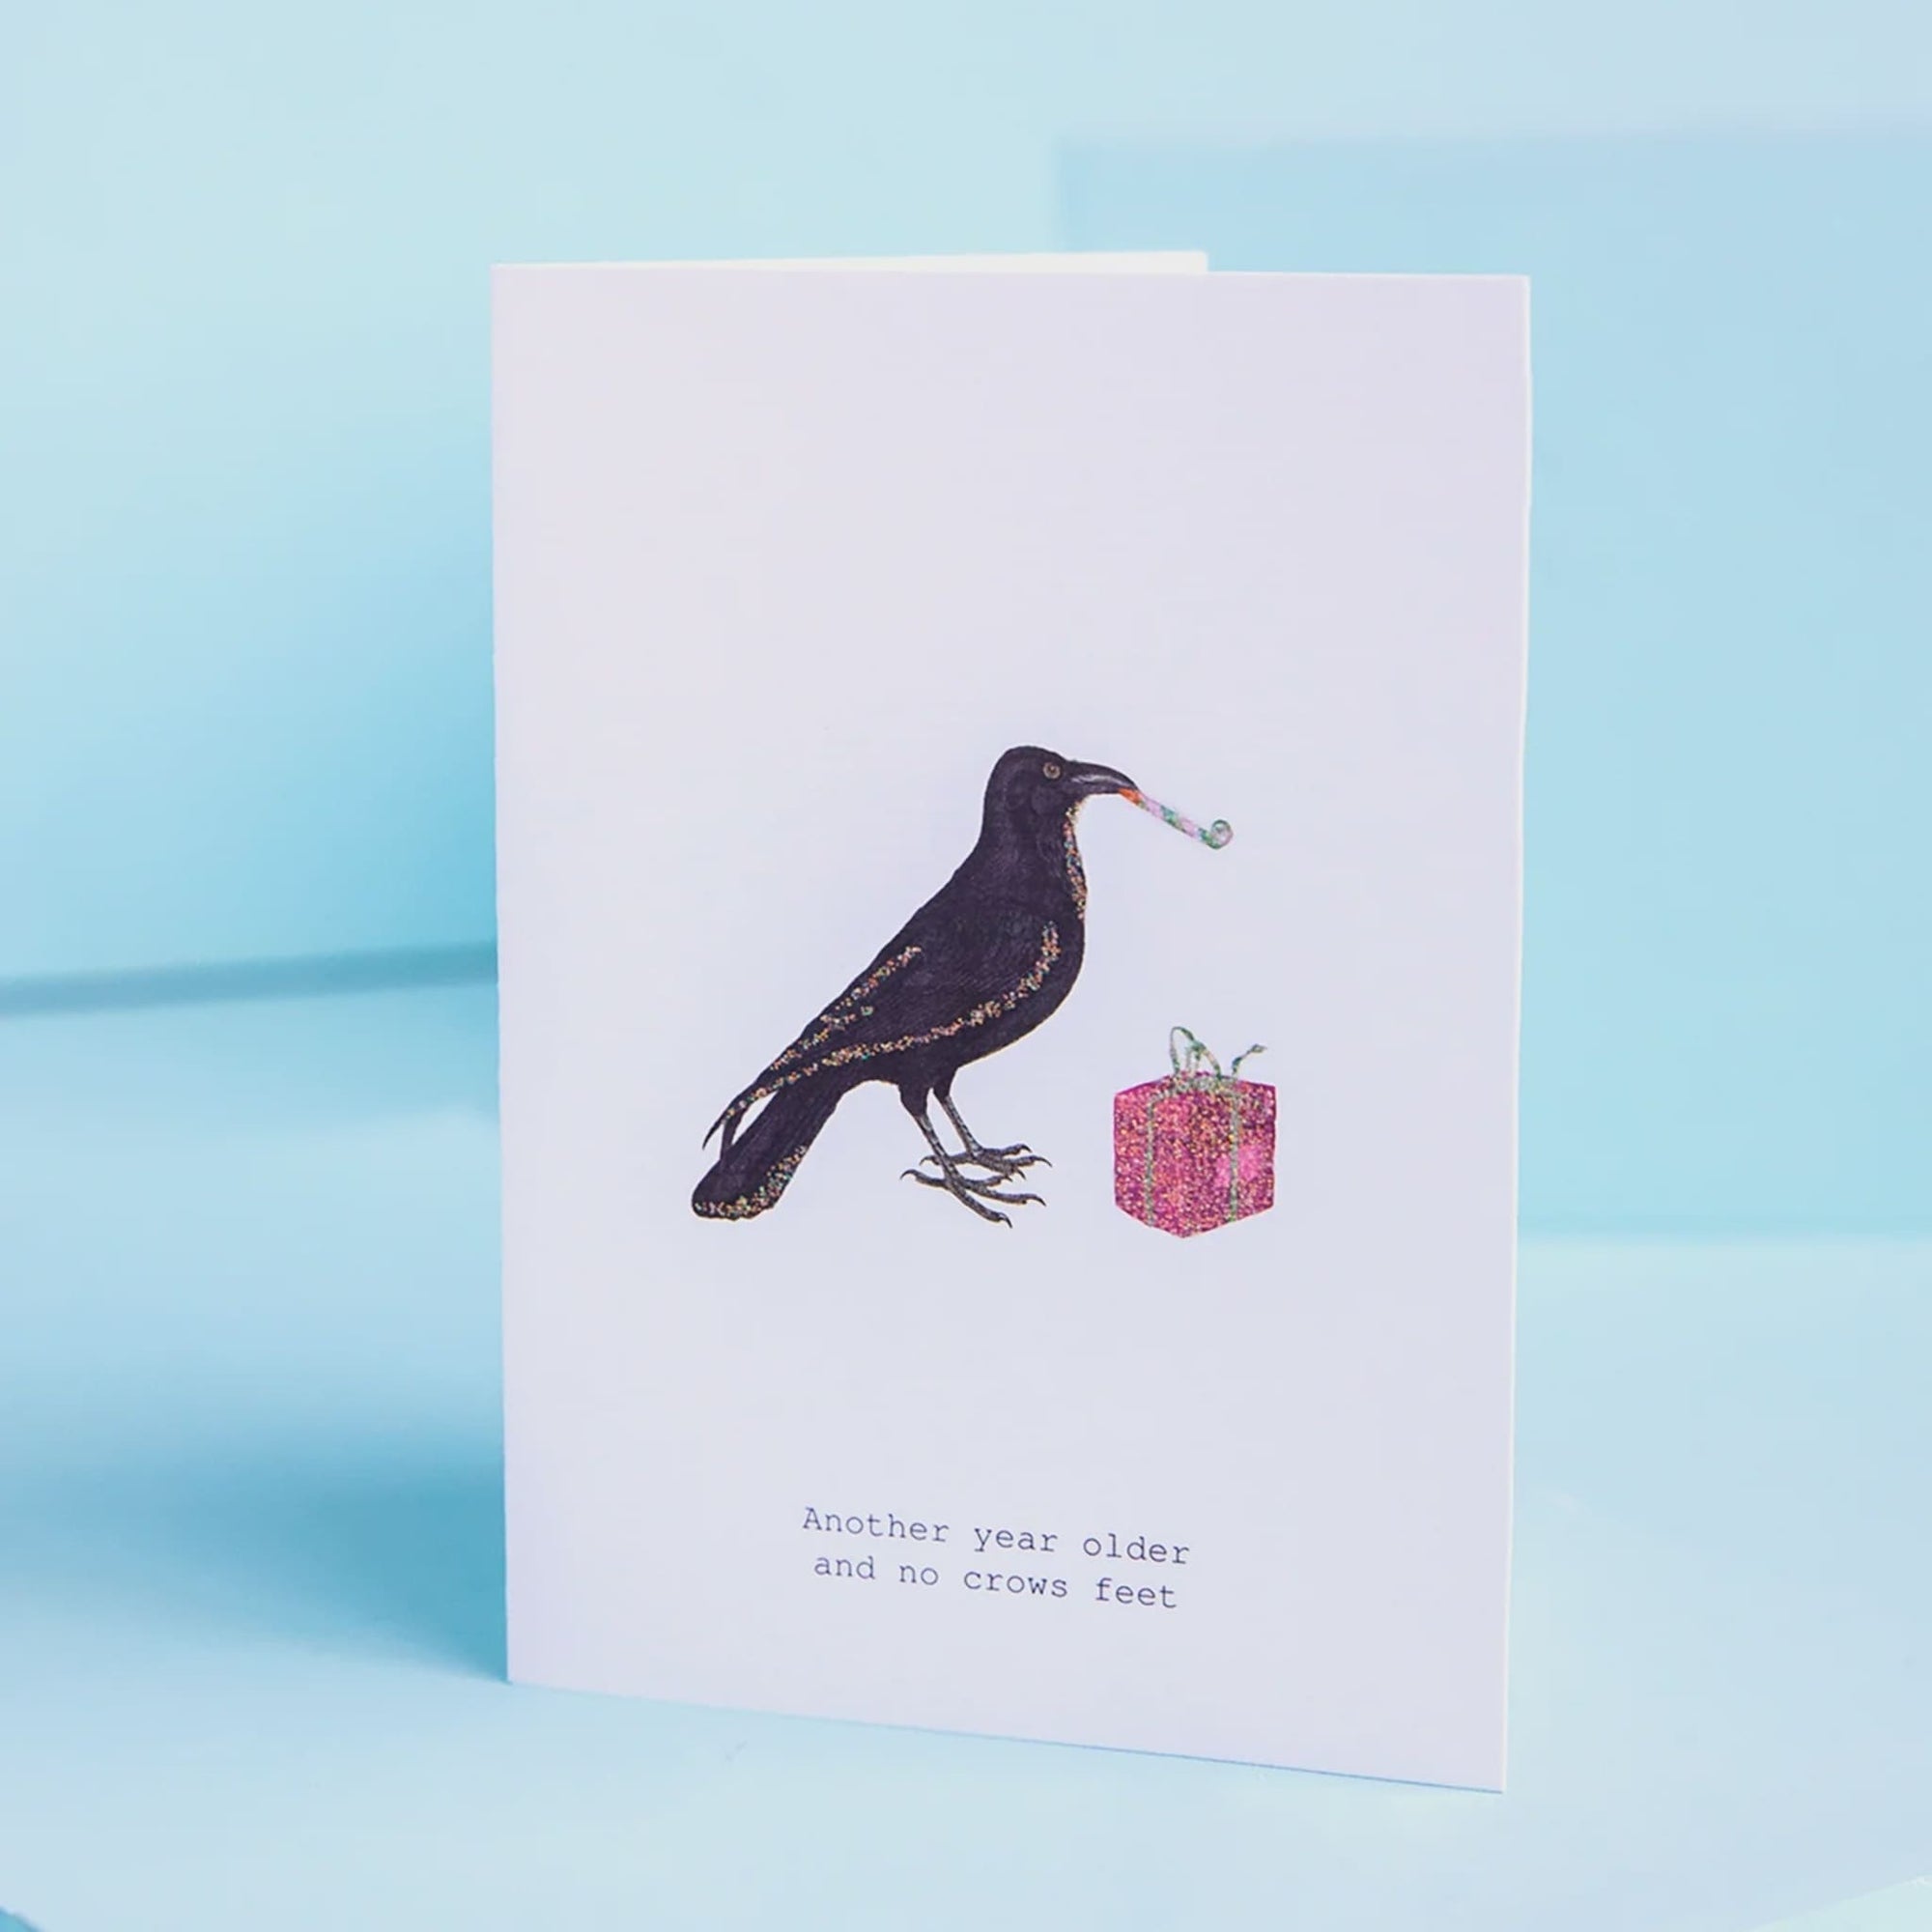 Crows Feet Greeting Card